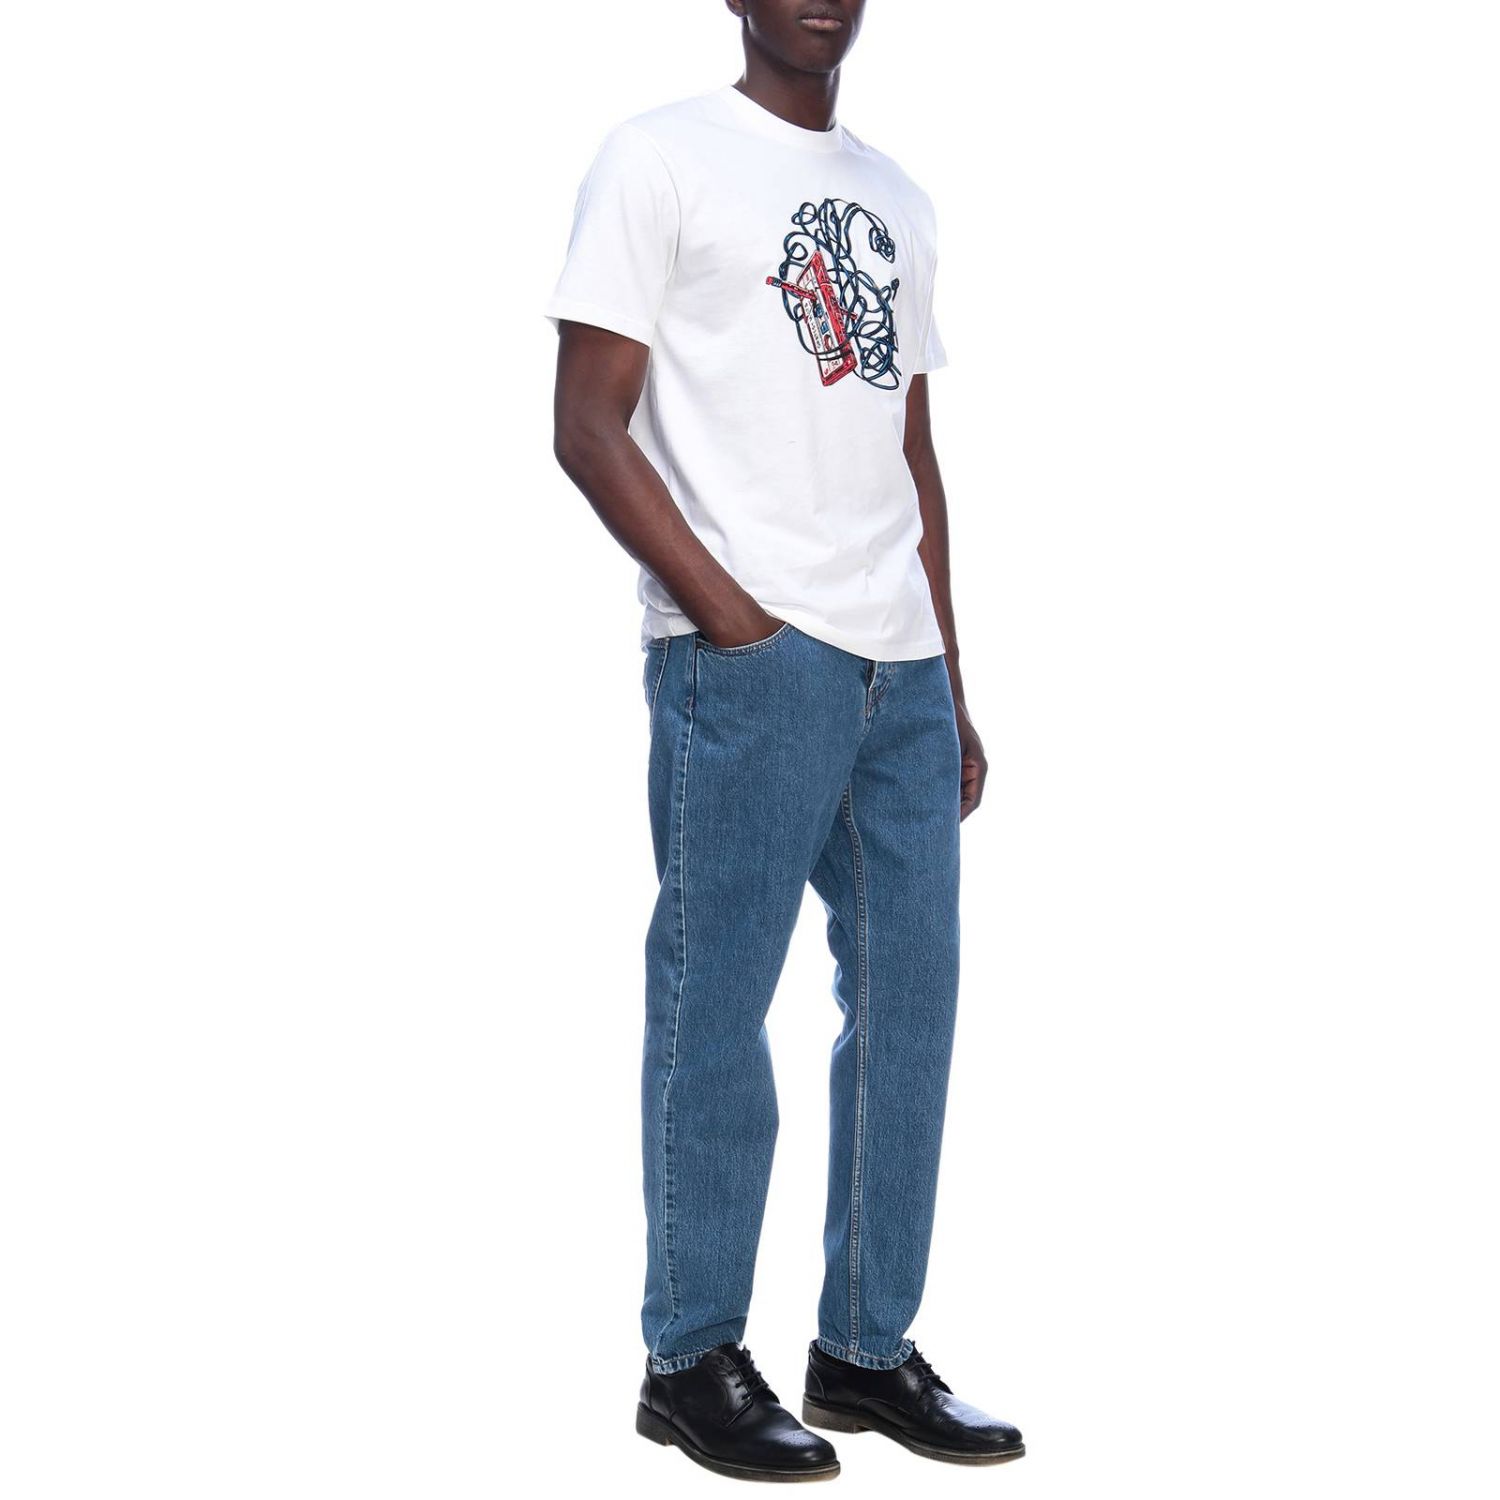 Carhartt Outlet: pants for man - Denim | Carhartt pants I02490400 ...